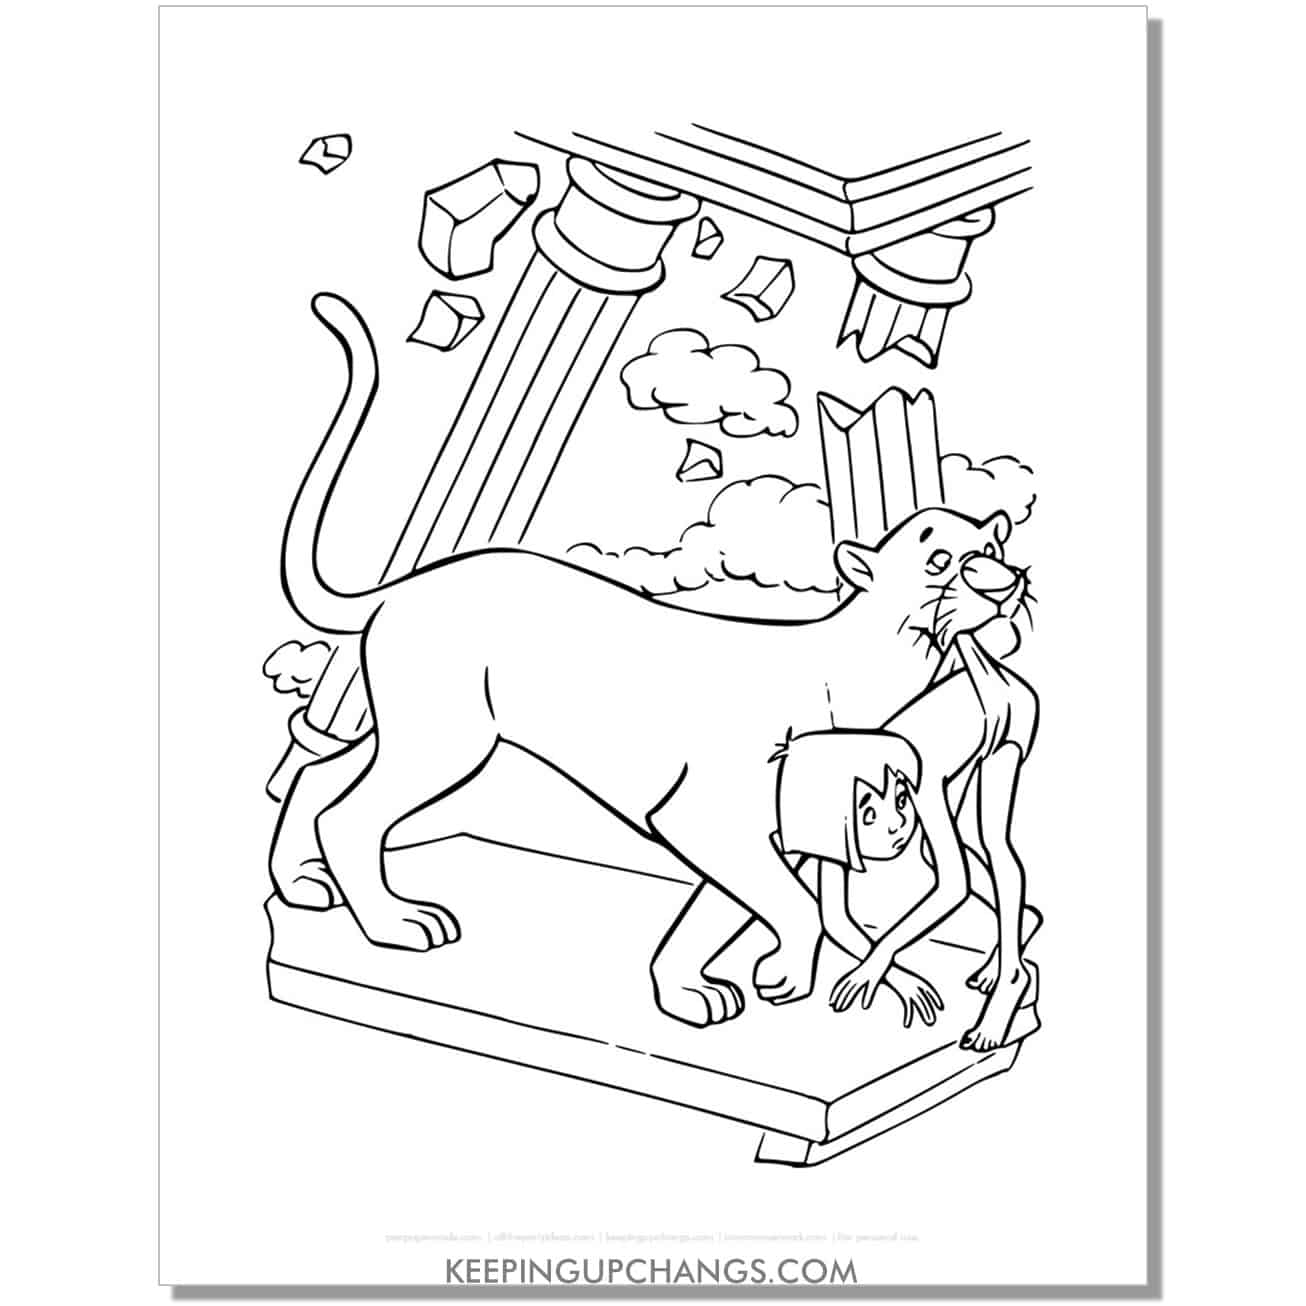 bagheera saves mowgli from temple ruins jungle book coloring page, sheet.